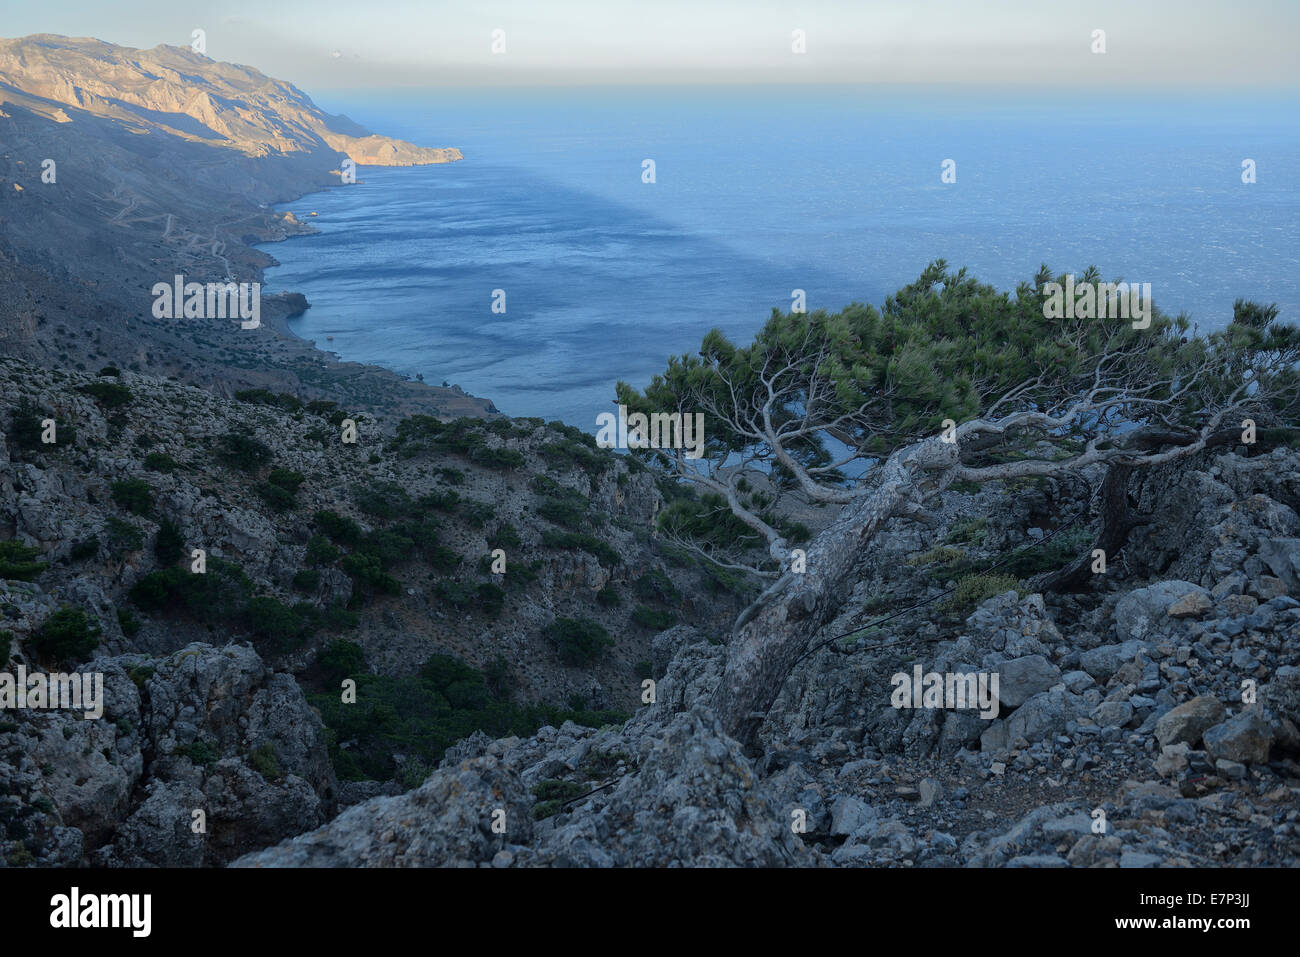 Europe, Greece, Greek, Crete, Mediterranean, island, Coast, Tris Ekklisies, coast, rugged, landscape, tree Stock Photo